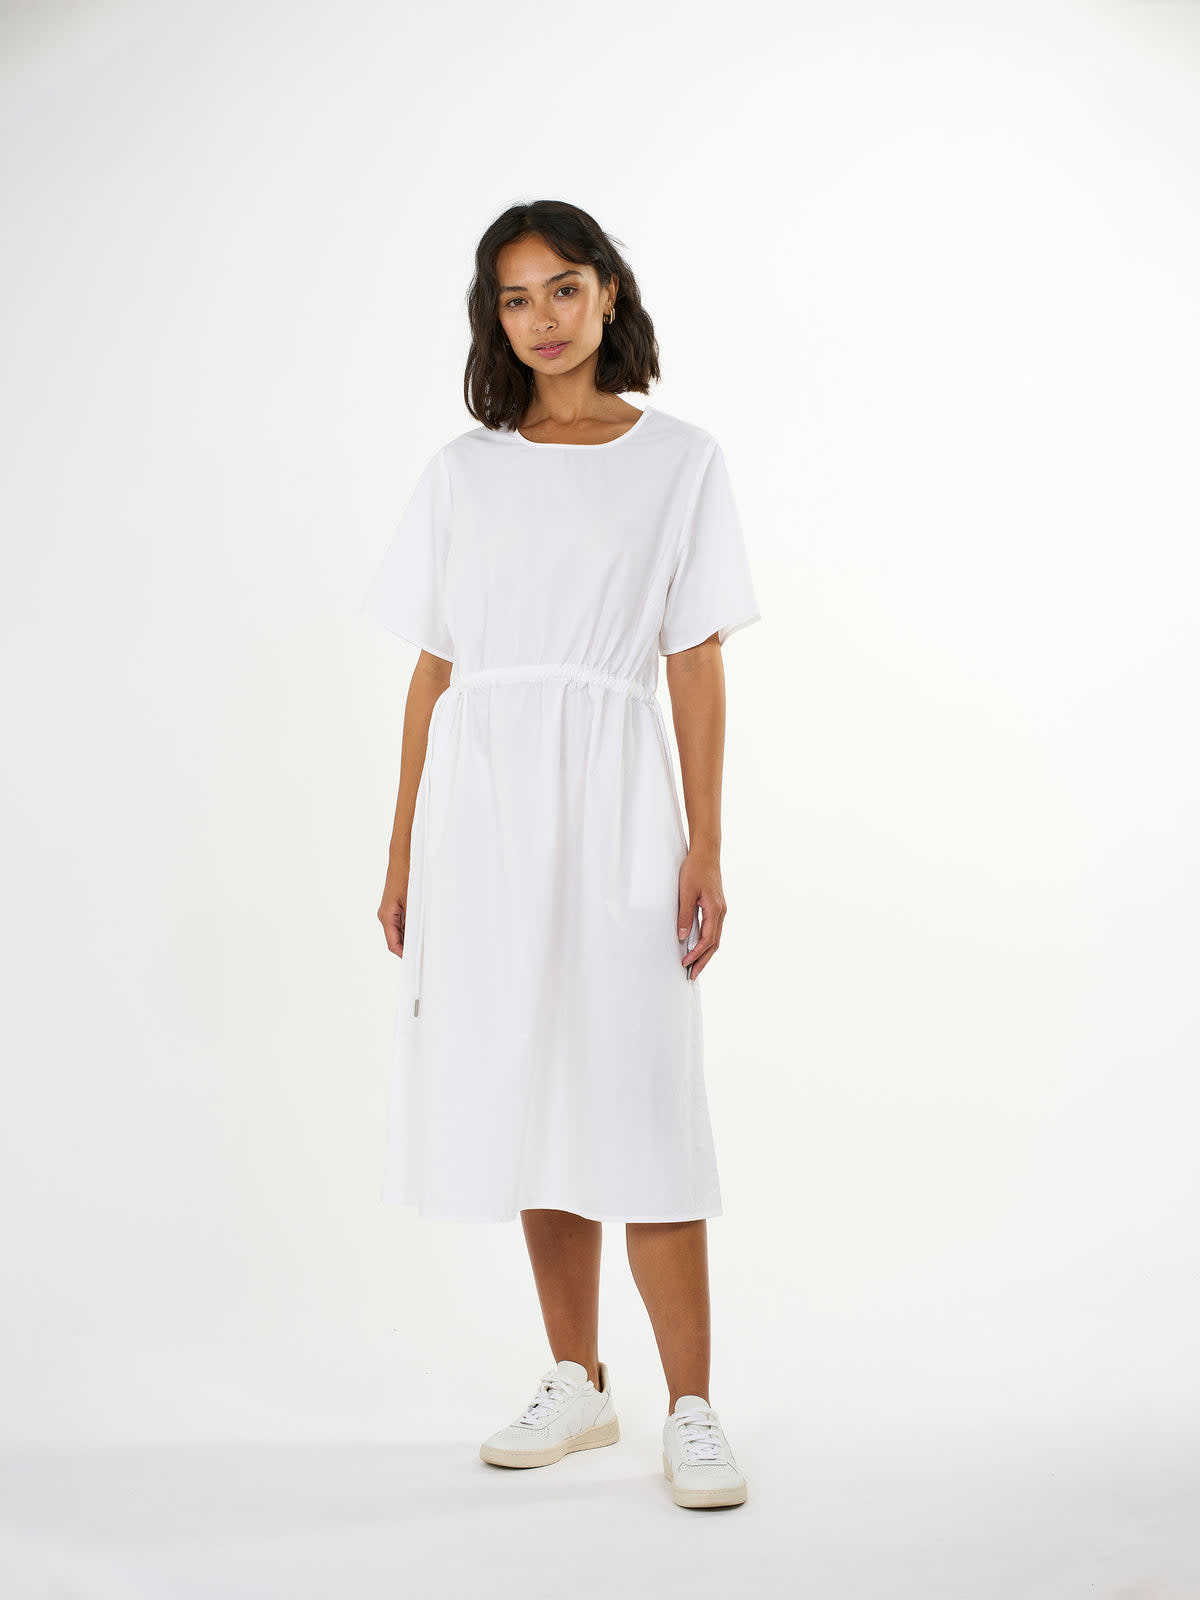 KnowledgeCotton Apparel KnowledgeCotton, Poplin O-Neck ss Dress, bright white, M